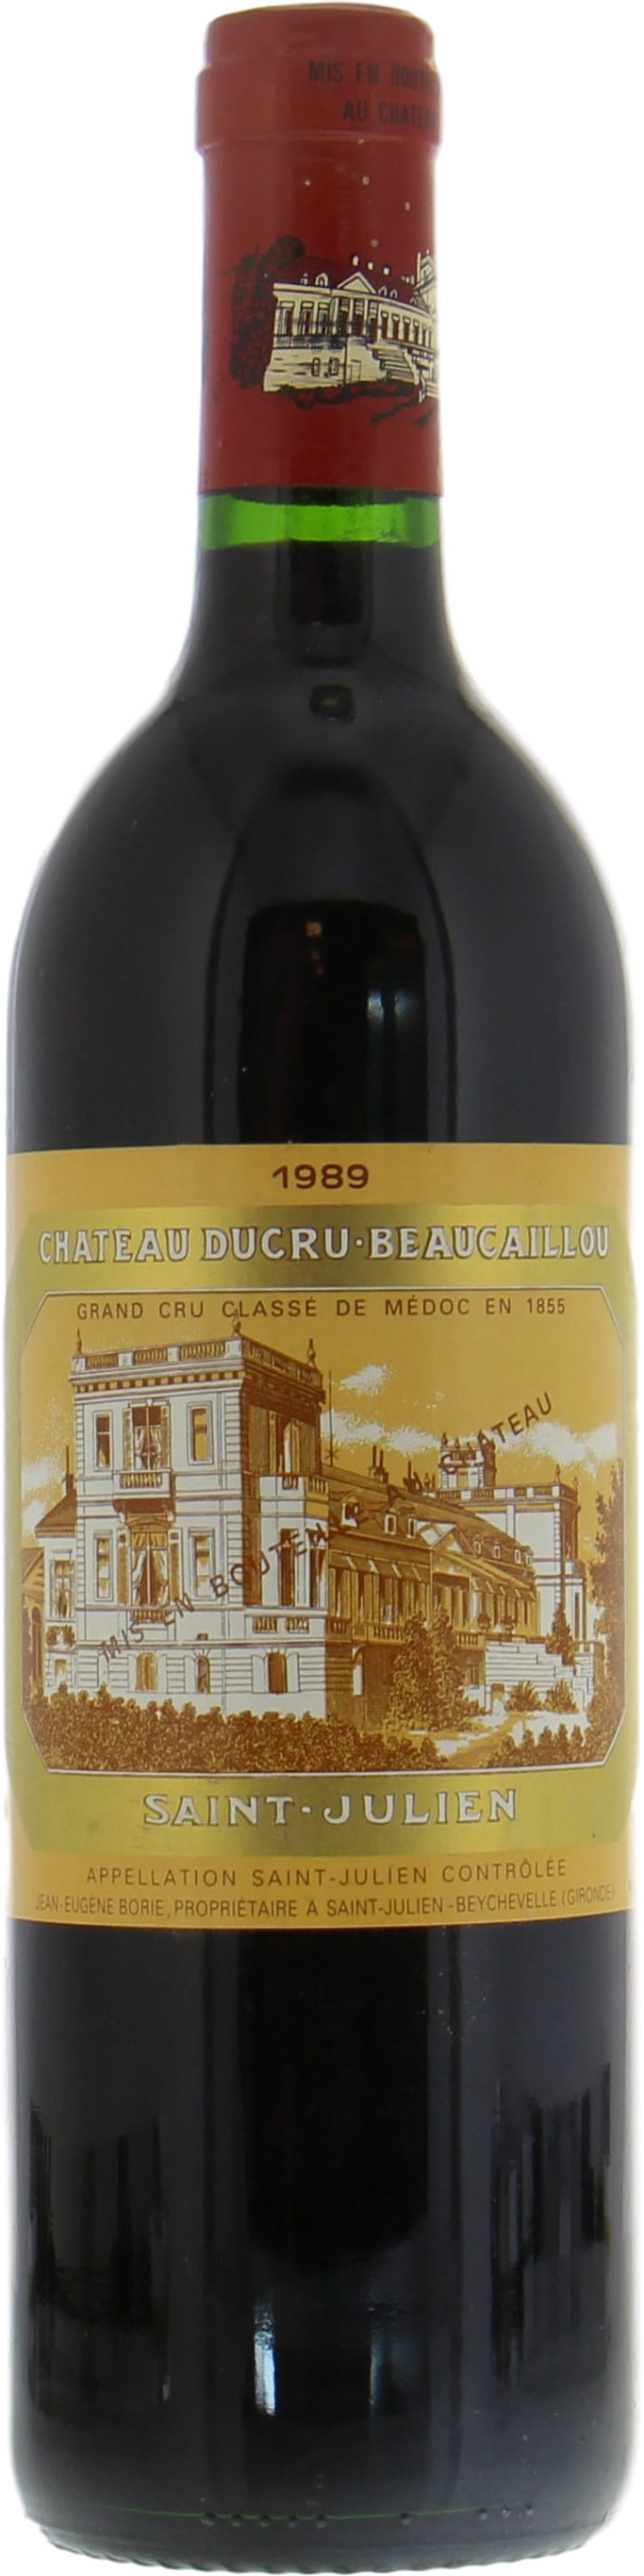 Chateau Ducru Beaucaillou - Chateau Ducru Beaucaillou 1989 Perfect